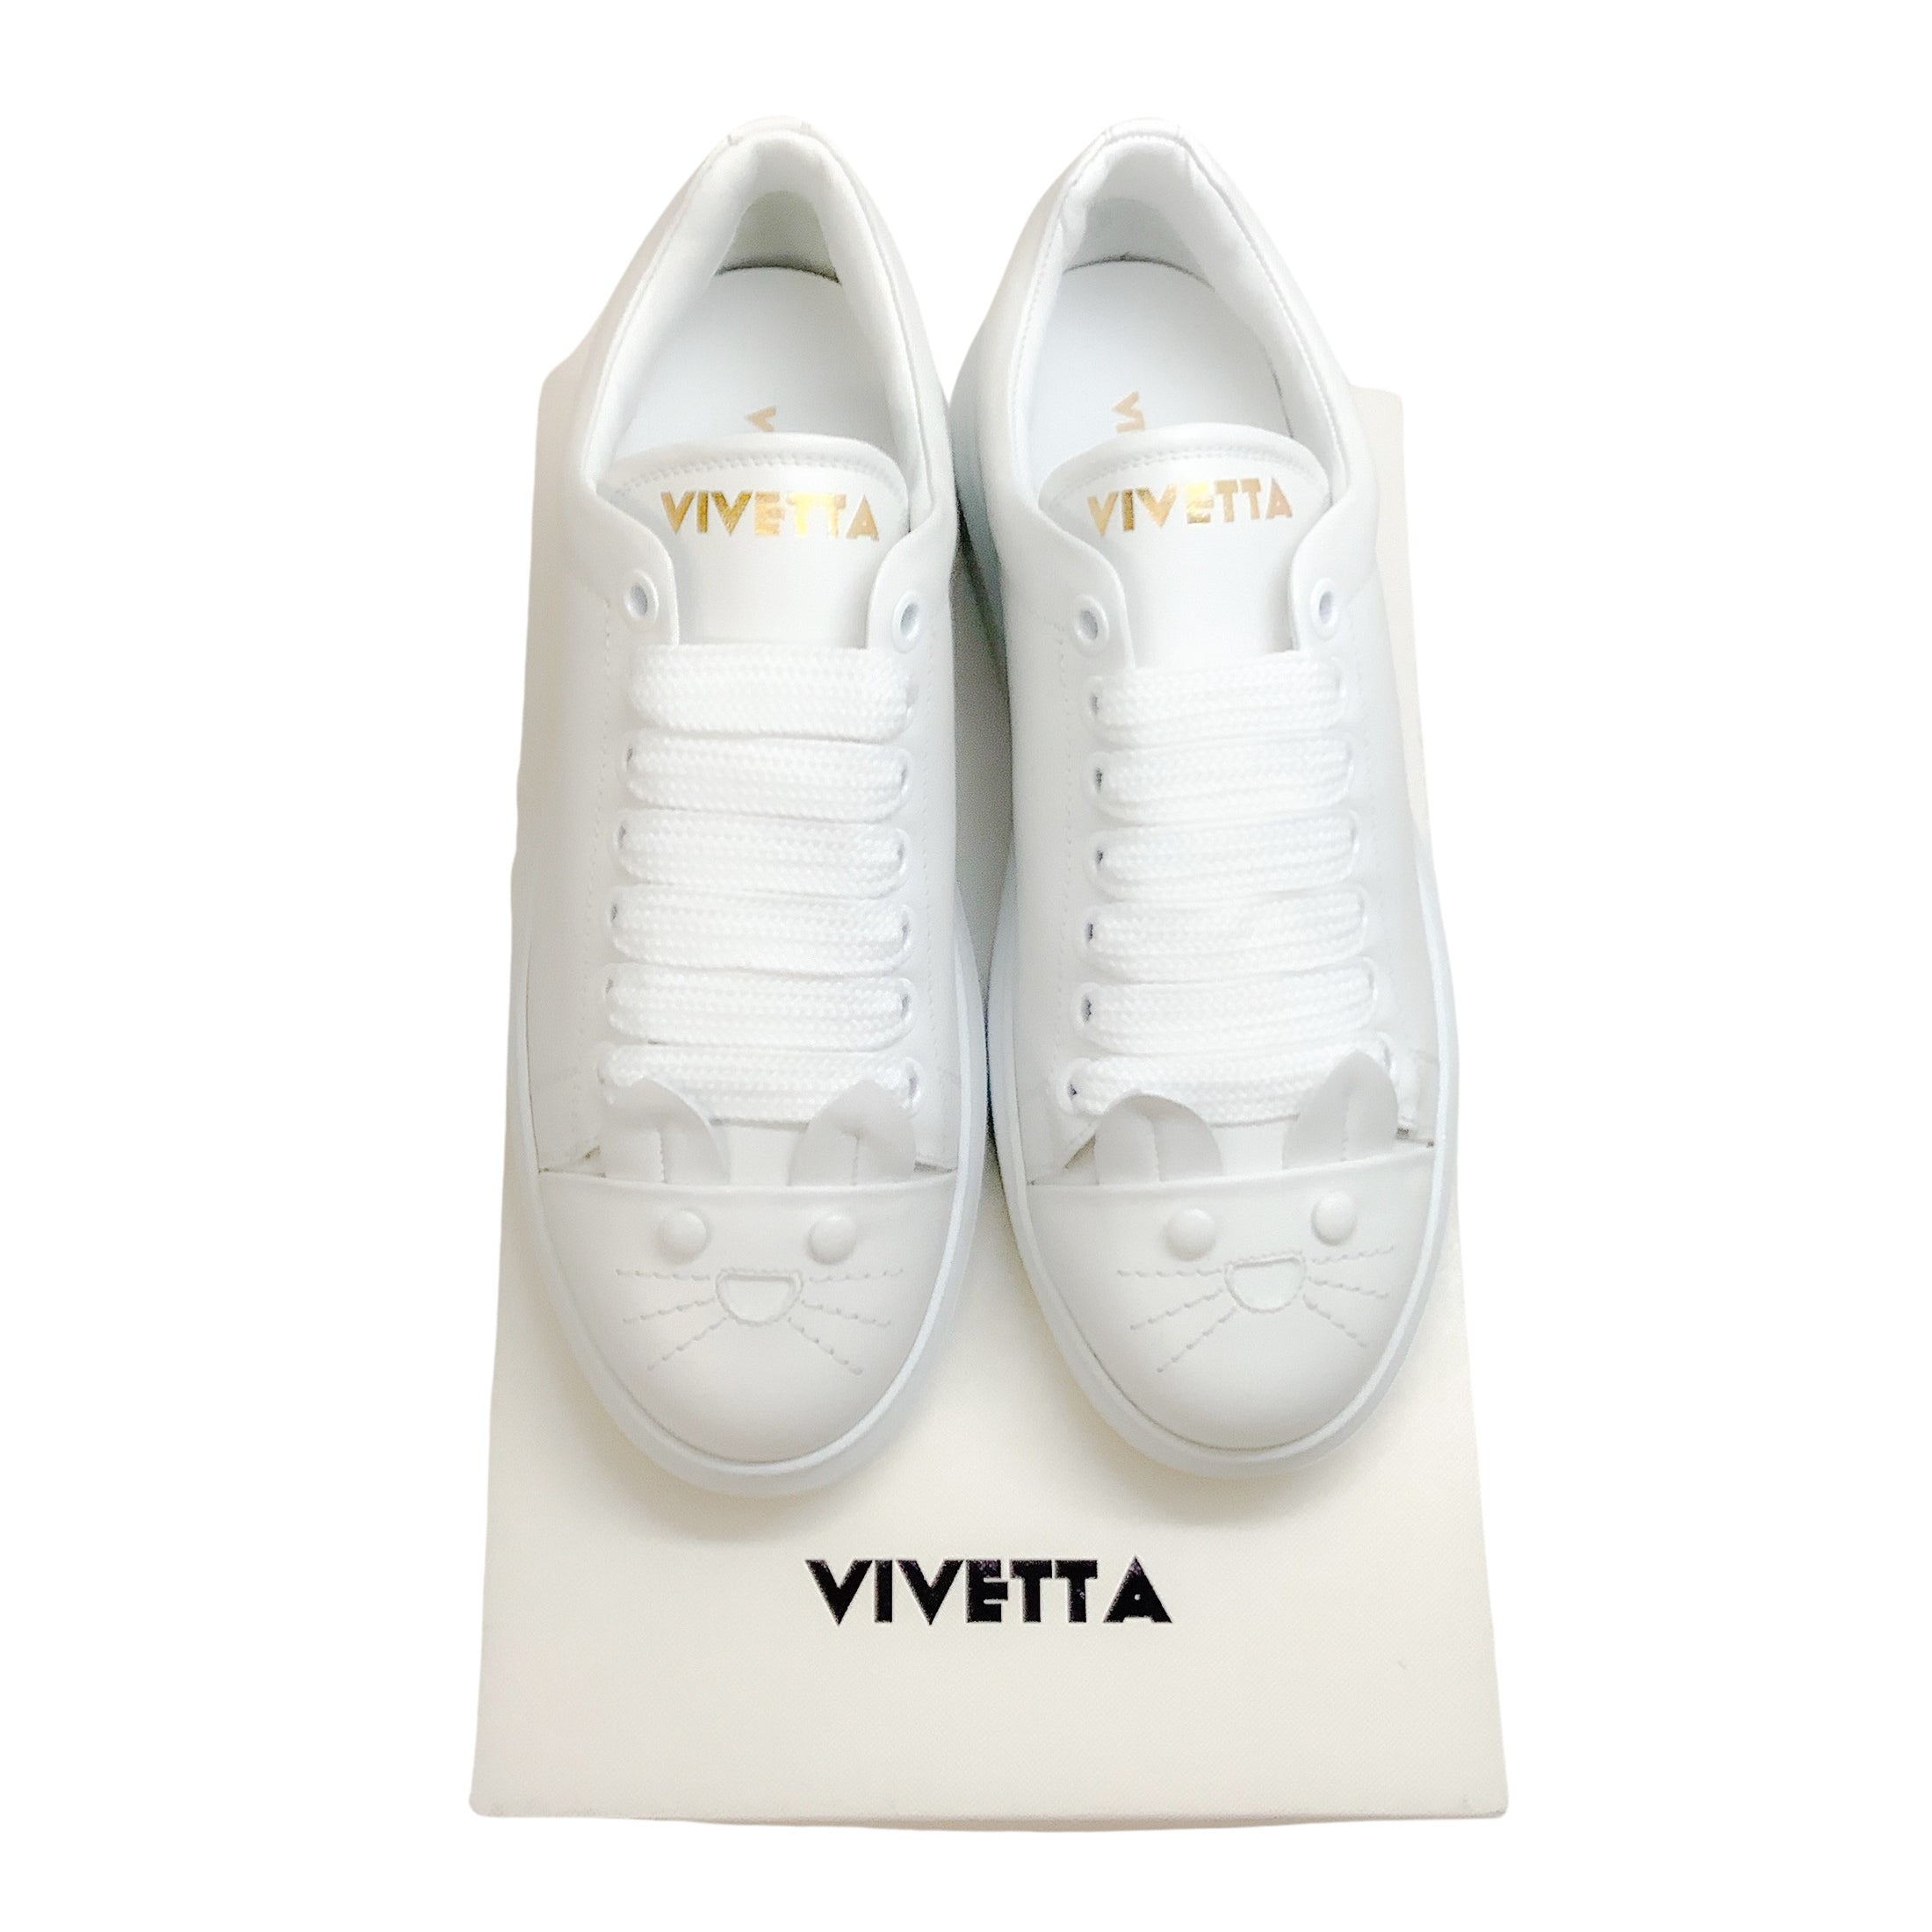 Vivetta White Leather Cat Sneakers